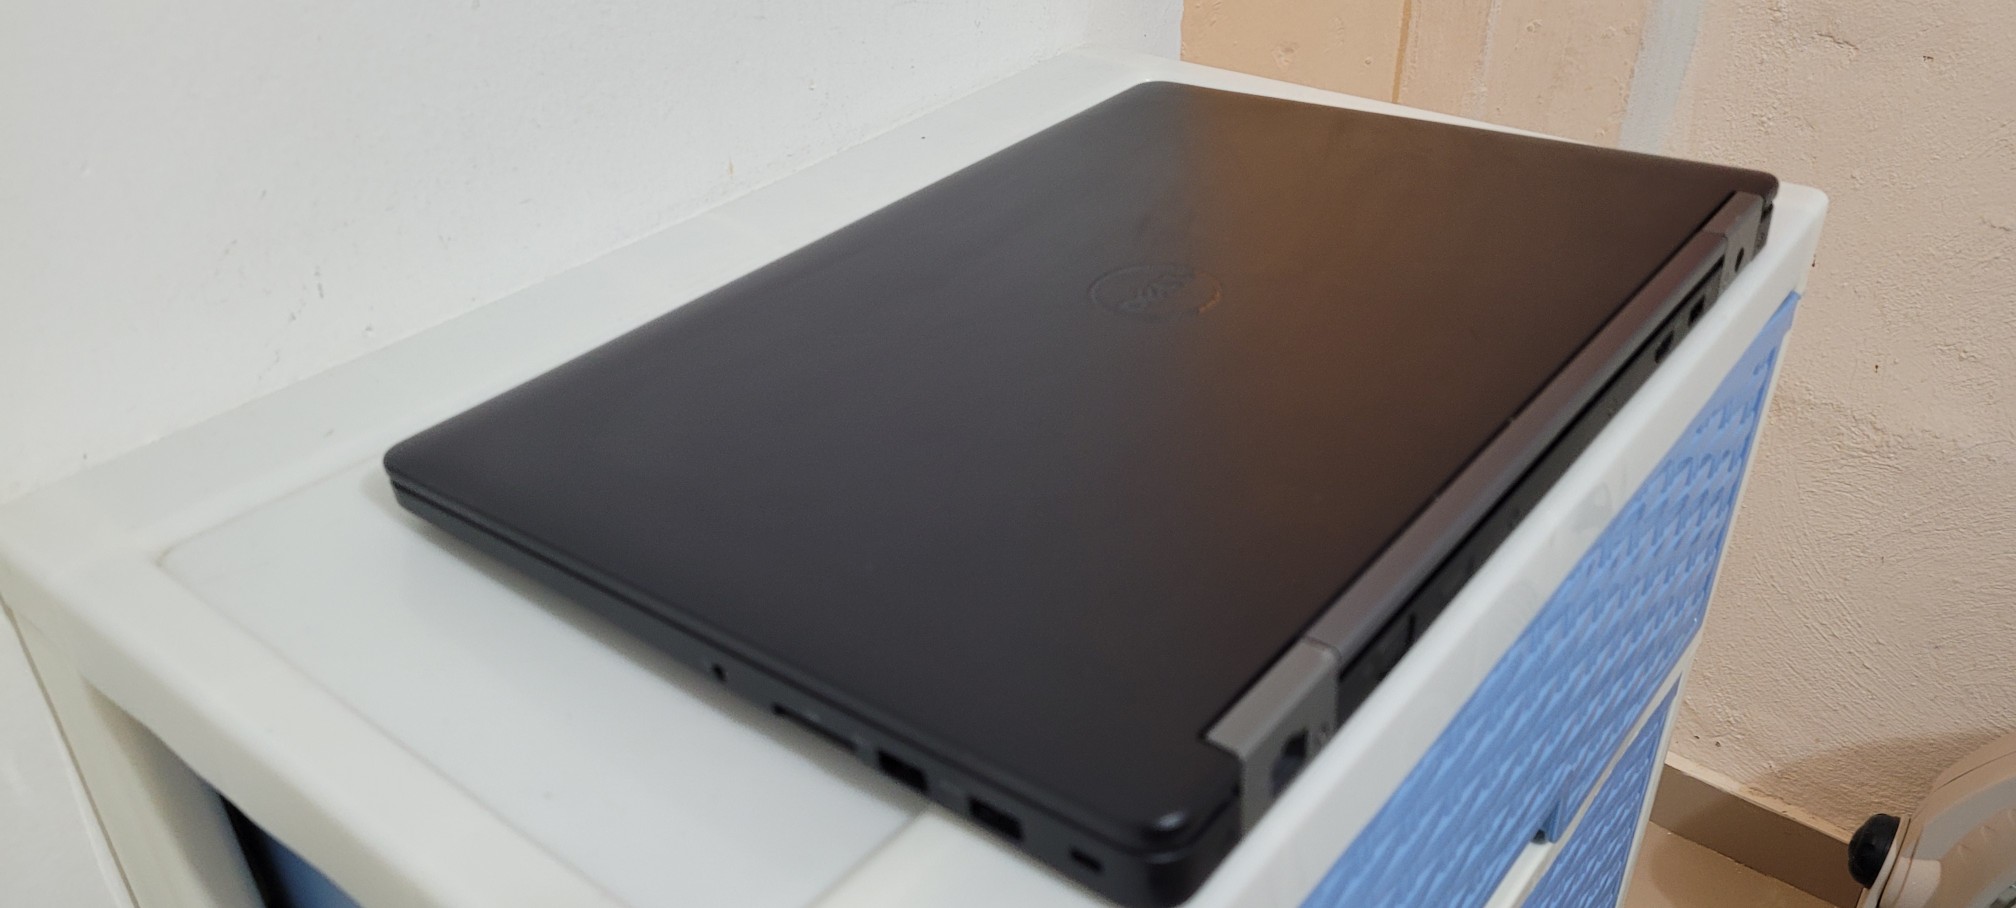 computadoras y laptops - Dell 5470 14 Pulg Core i7 6ta Gen Ram 16gb ddr4 Disco 256gb SSD Solido New 2